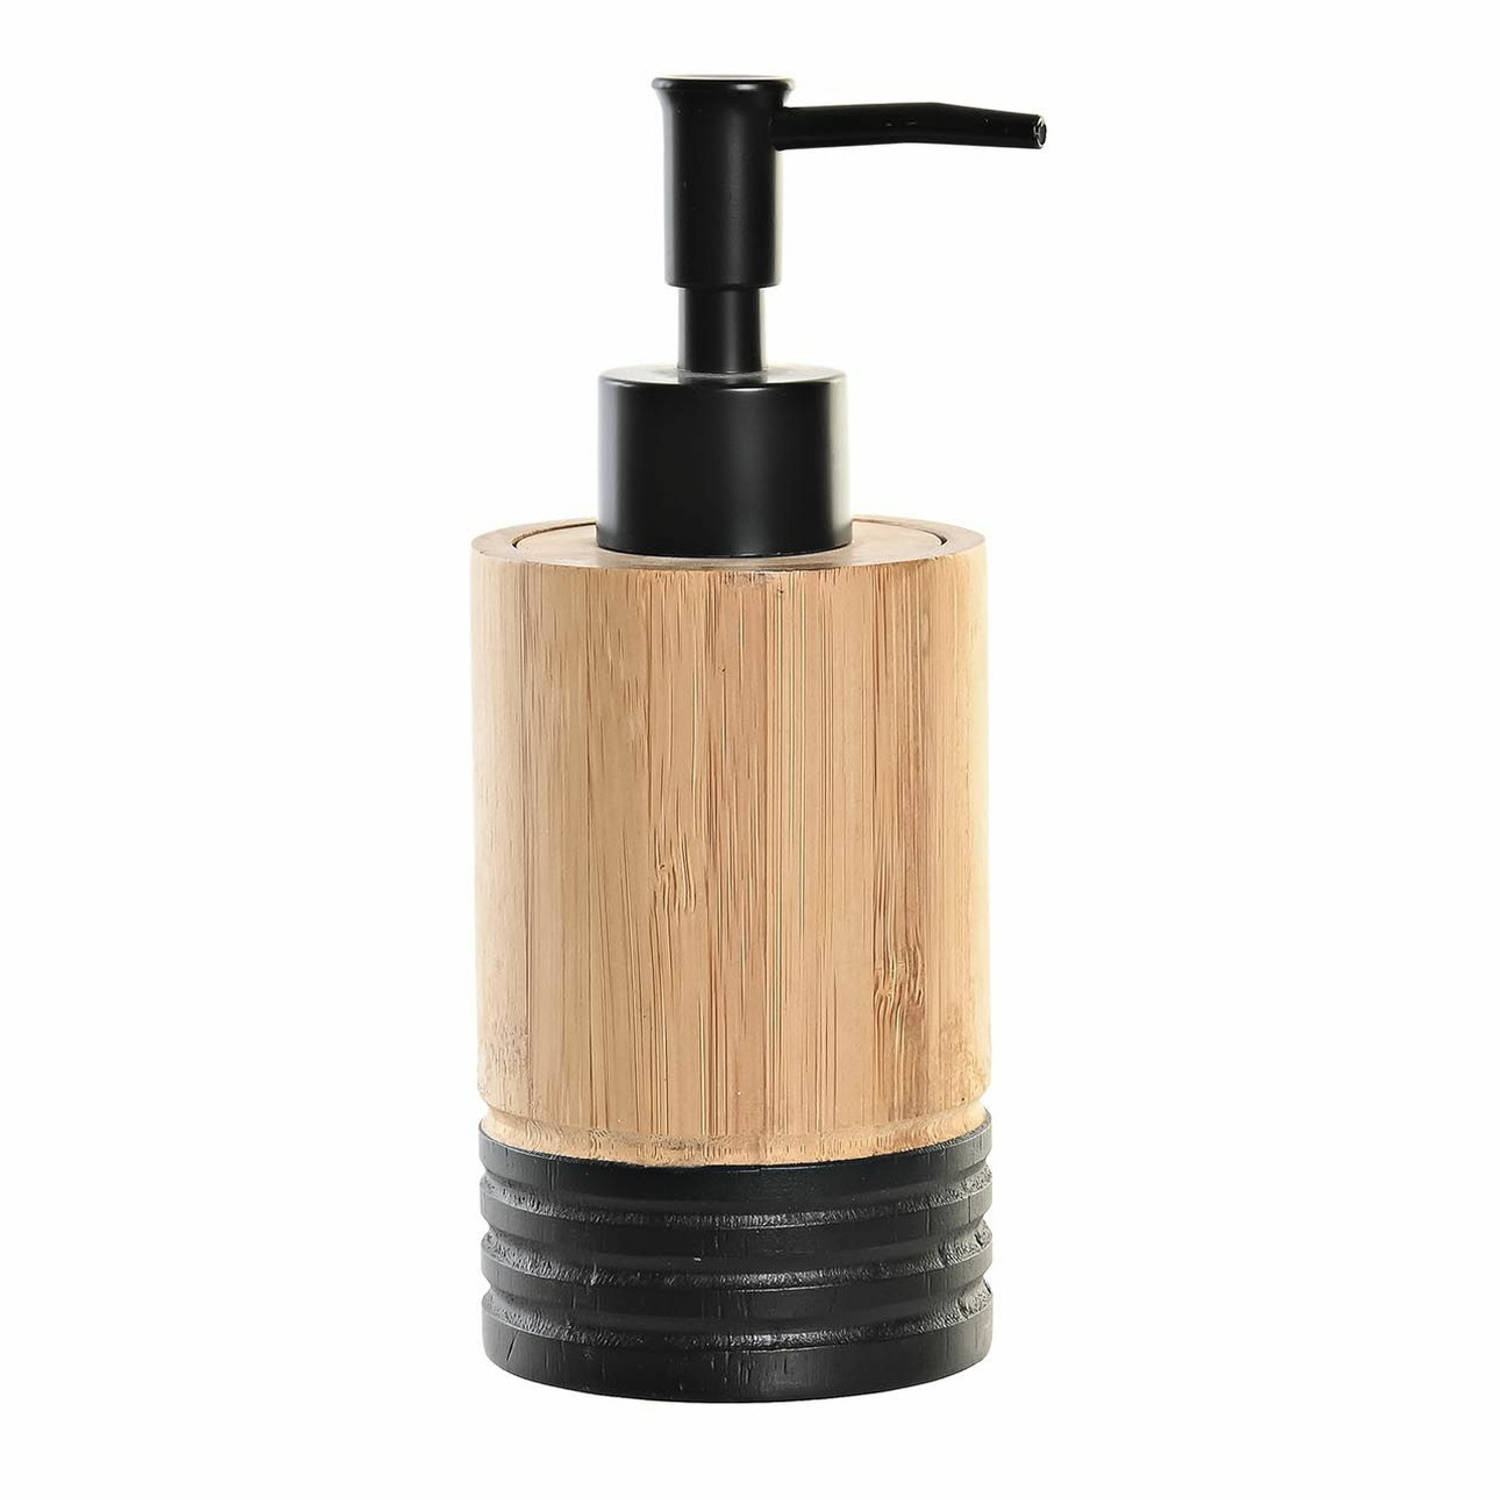 Items Zeeppompje/dispenser - bruin/zwart - bamboe hout - 7 x 17 cm